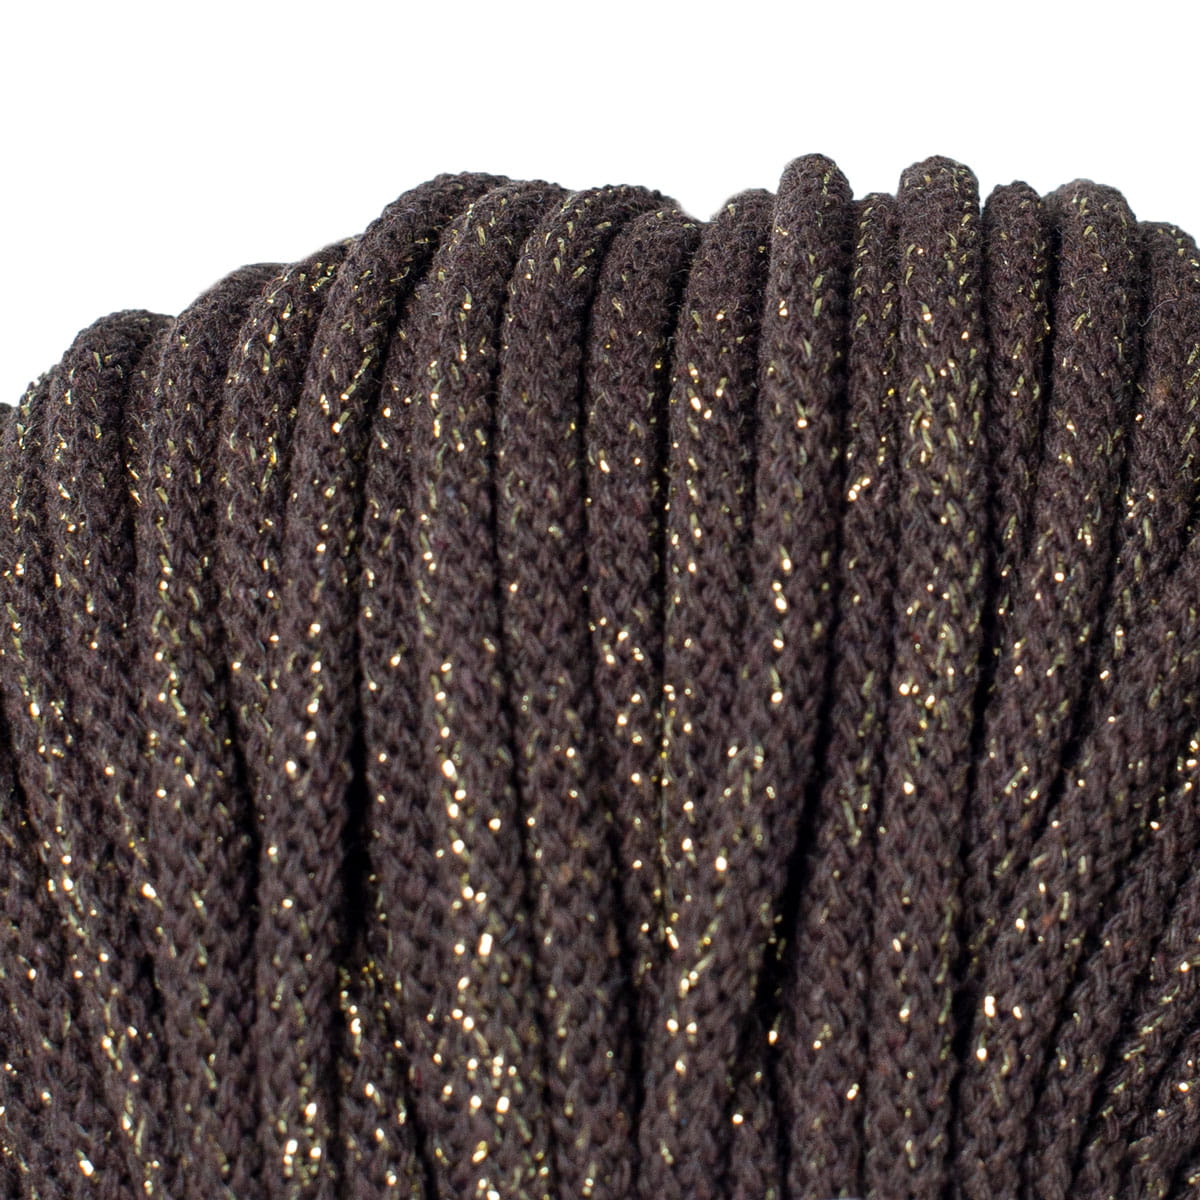 Brown & gold thread Premium braided cotton cord 5mm